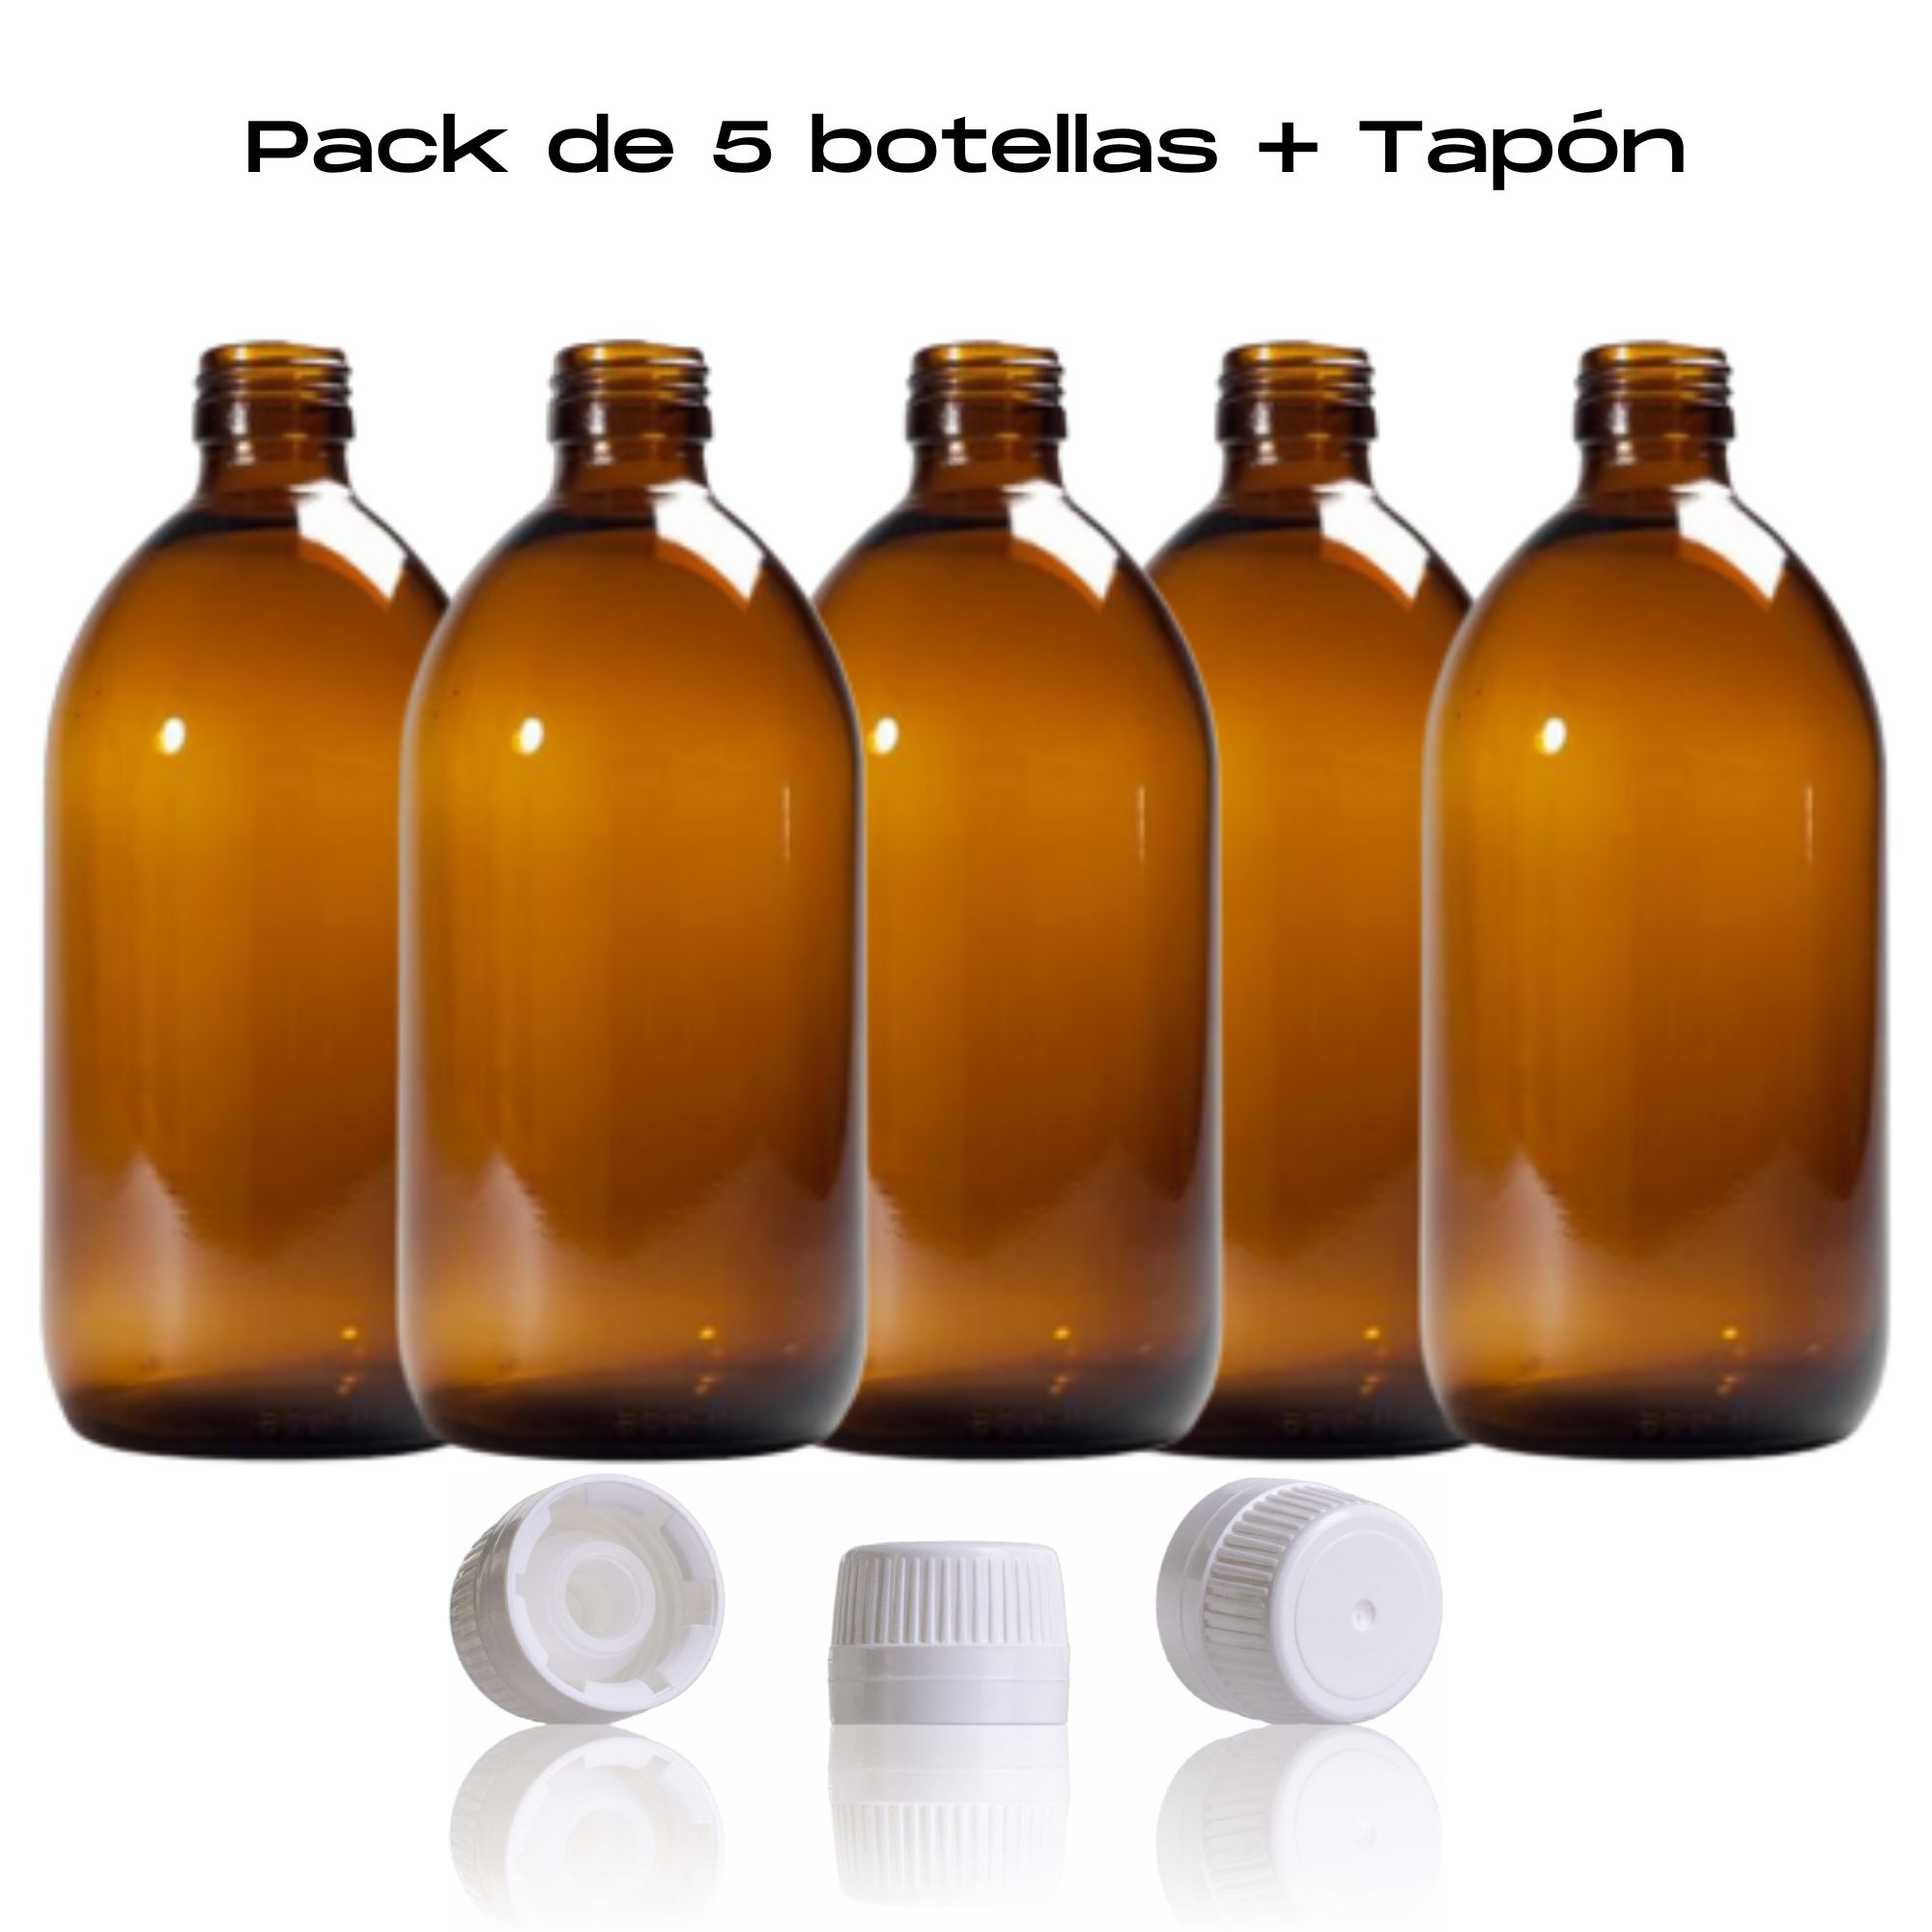 pack 5 botellas cristal Ámbar | tapón dosificador | especial para cosmetica +farmacia+liquidos (250ml, pack5)